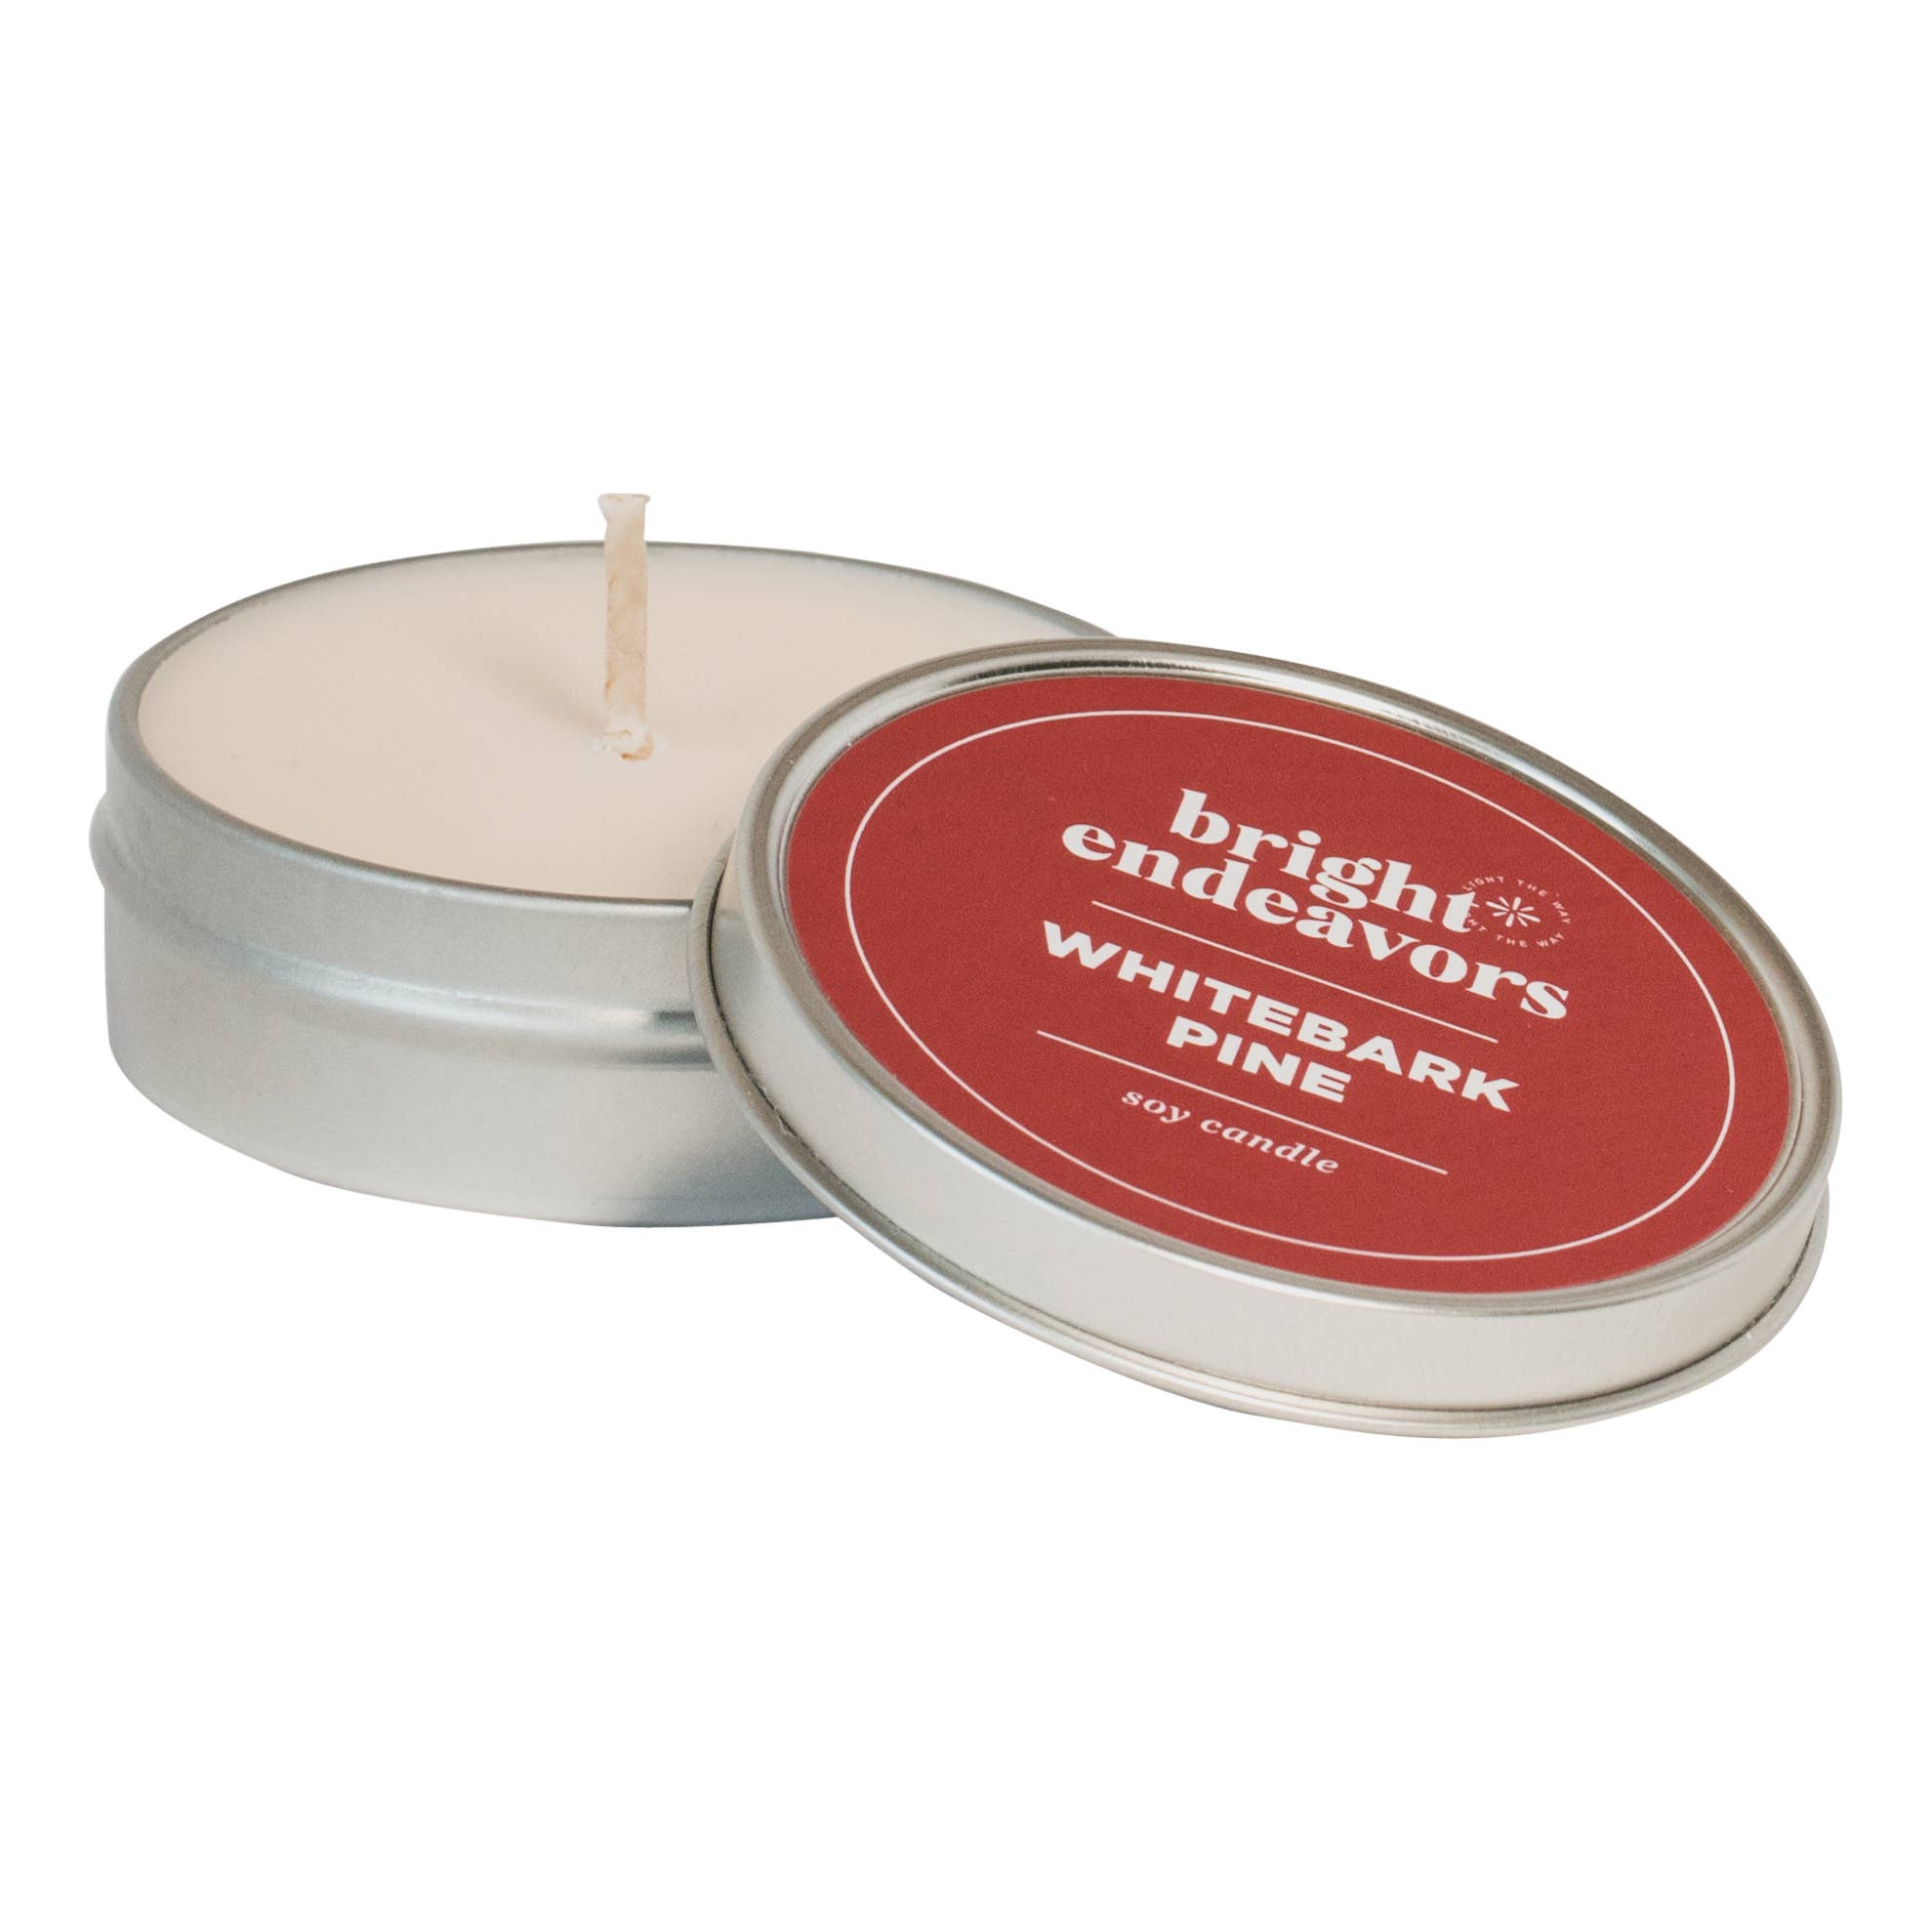 Whitebark Pine Candle: 4oz Tin